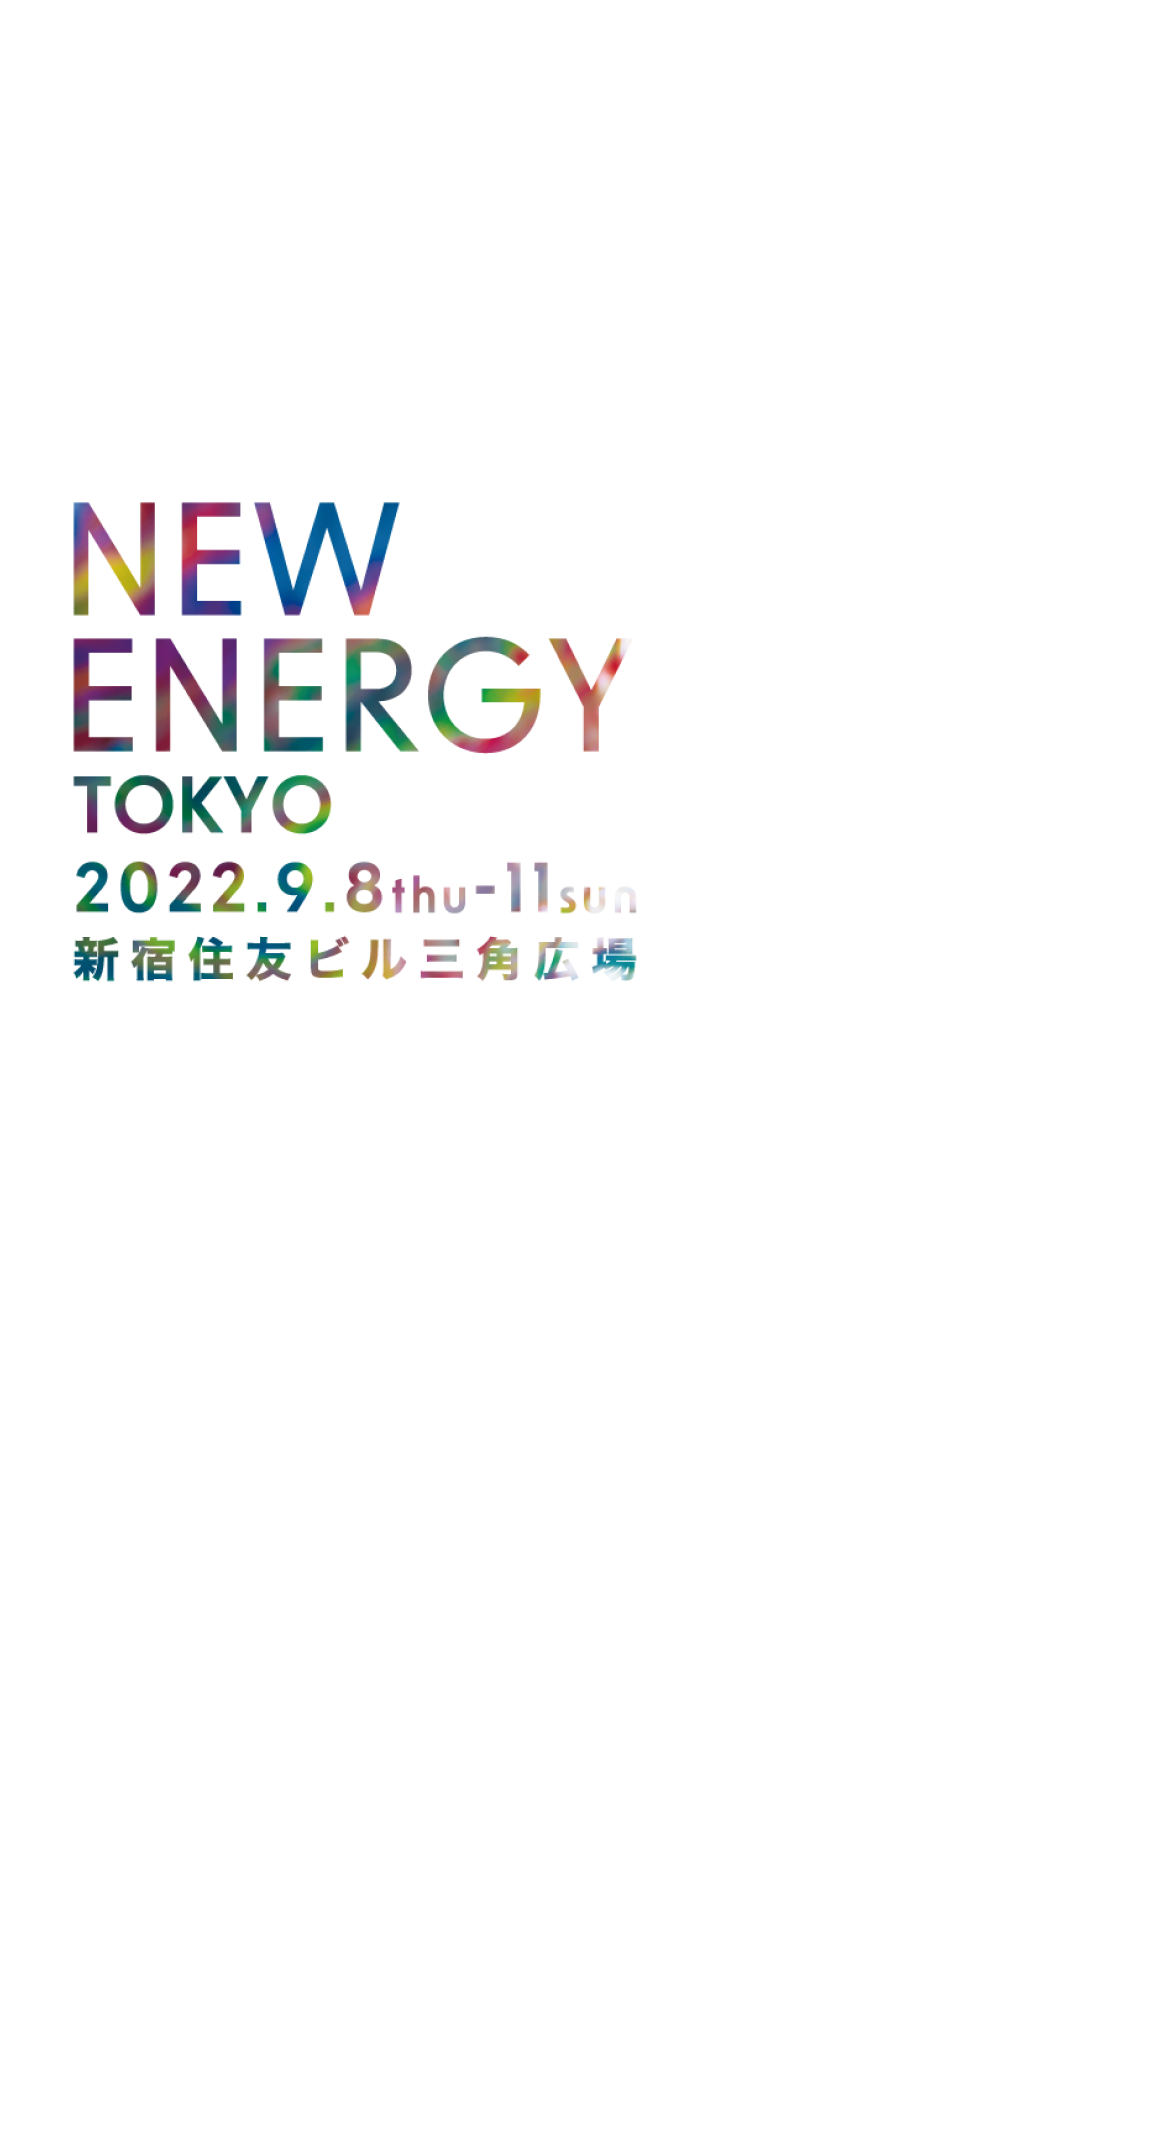 New Energy Tokyo 2022.9.8thu-11sua 新宿住友ビル三角広場